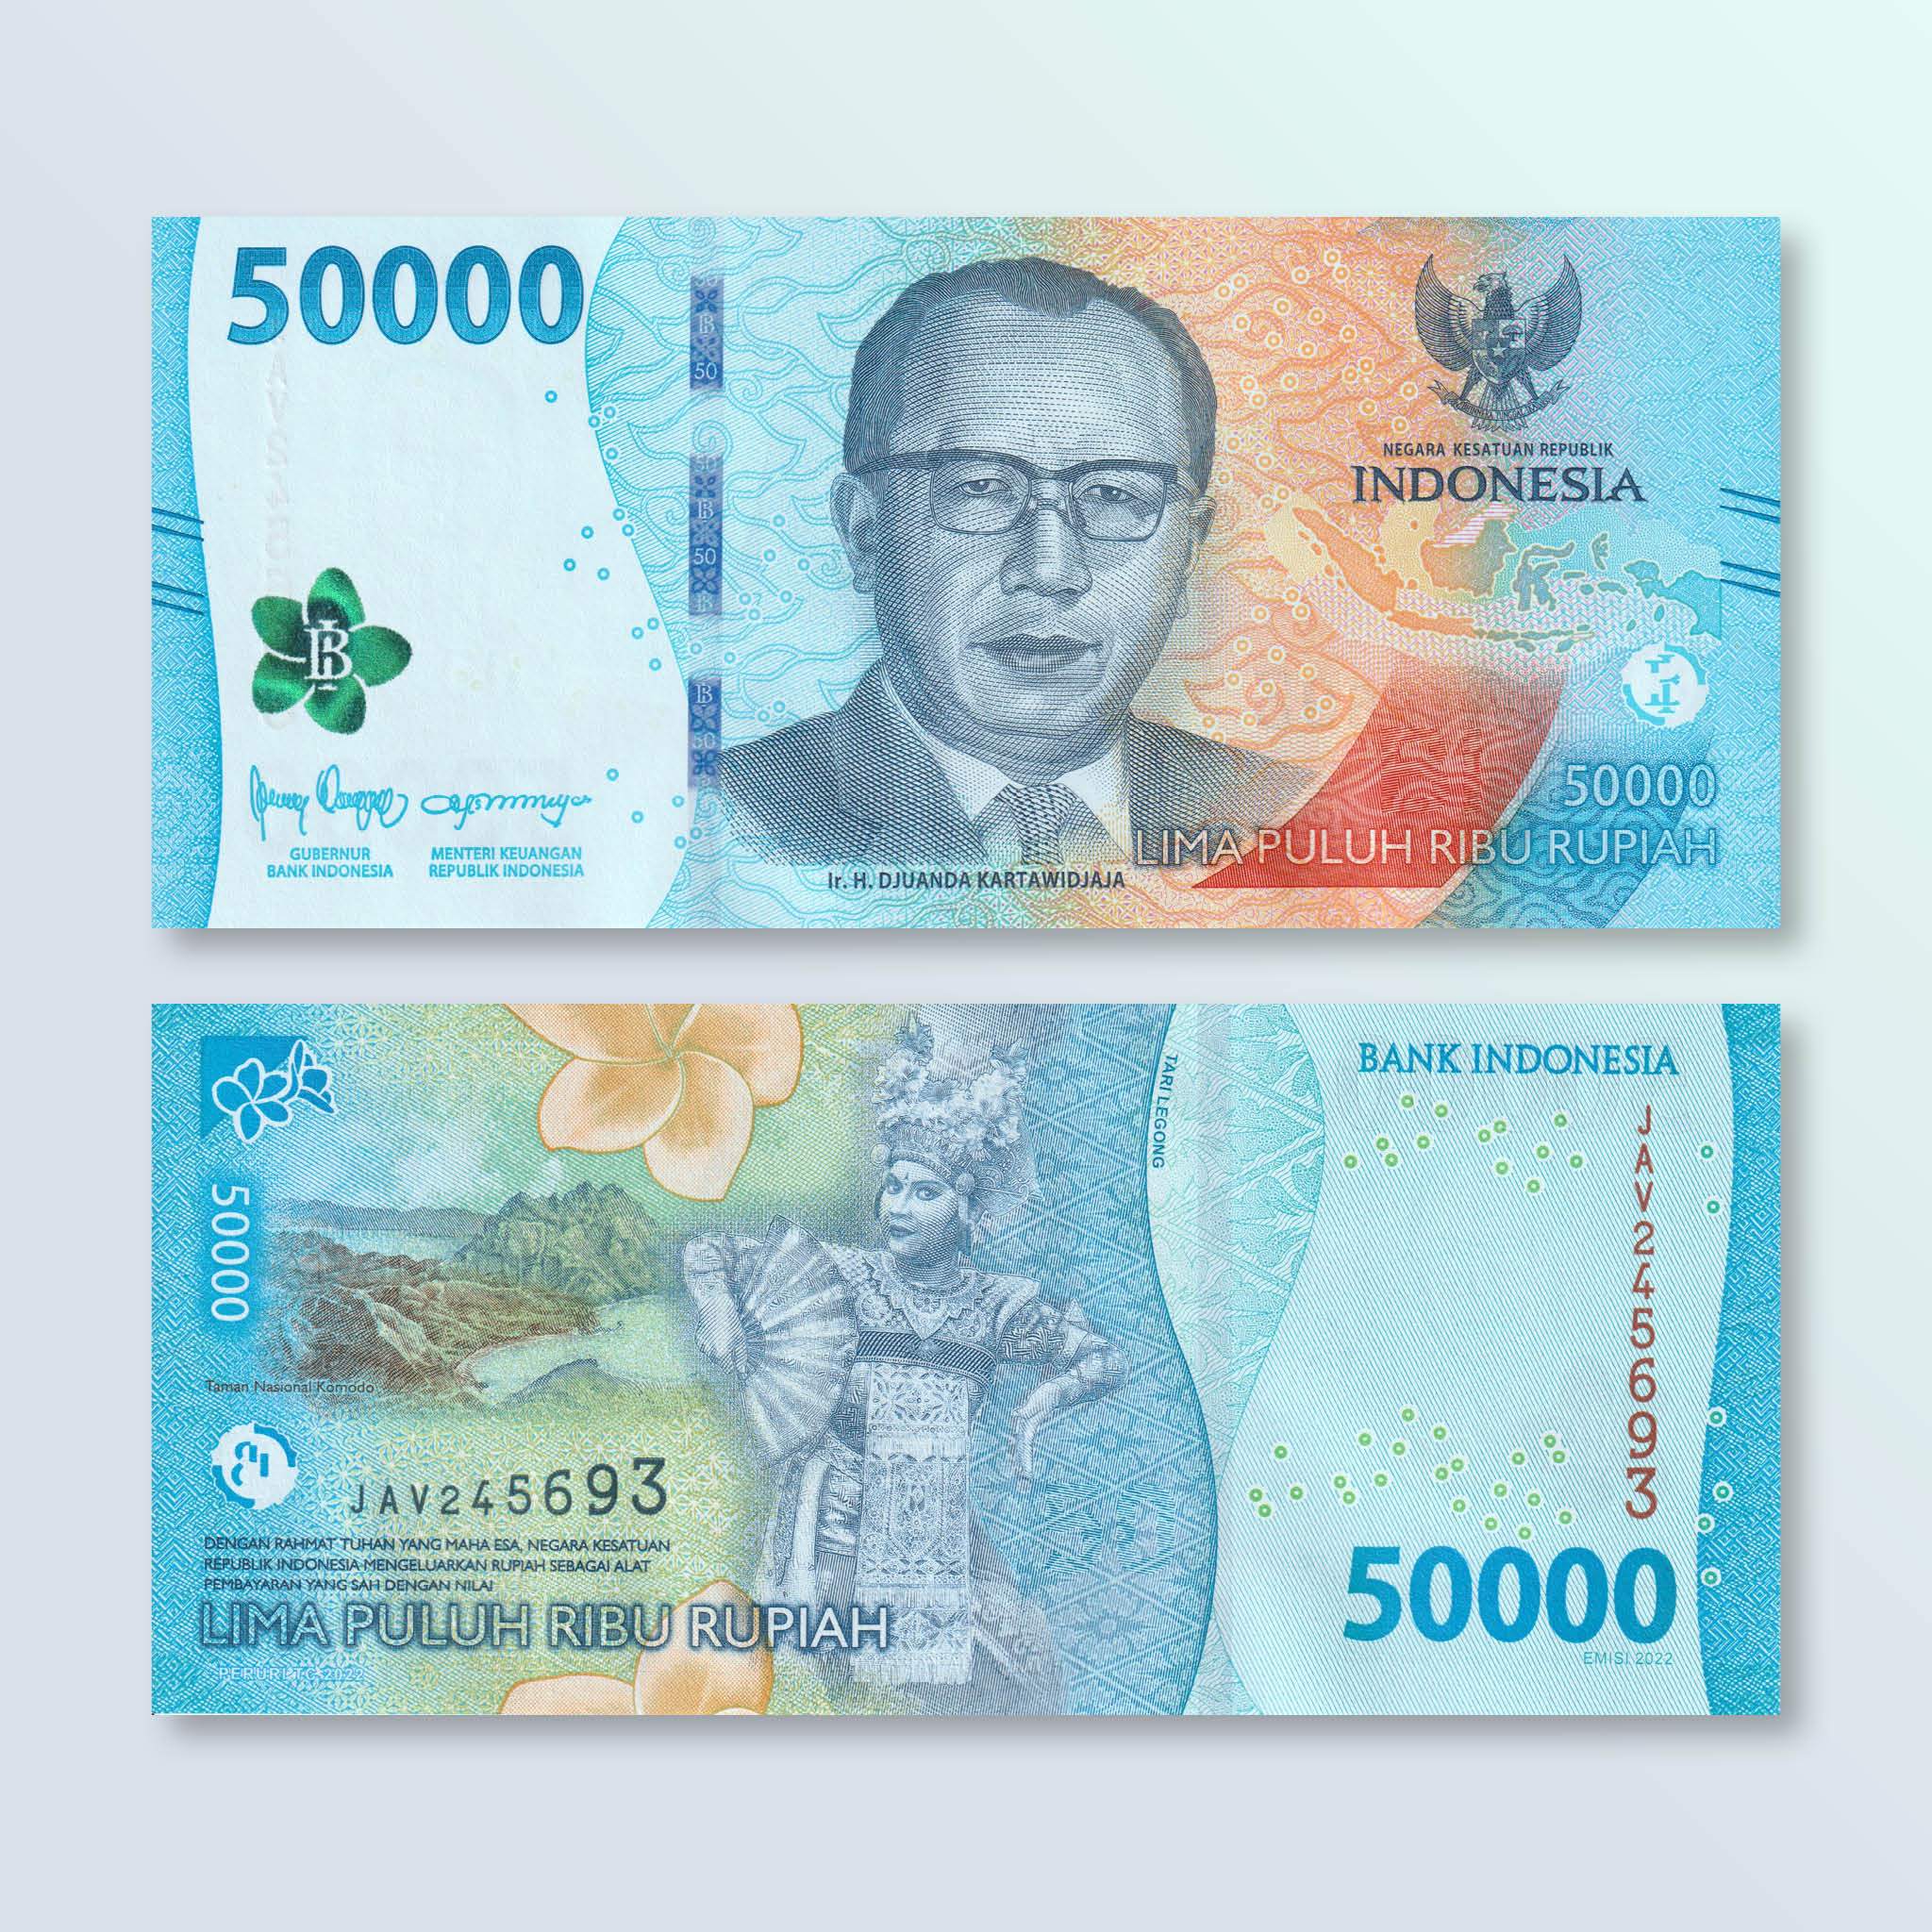 Indonesia 50000 Rupiah, 2022, B622a, UNC - Robert's World Money - World Banknotes